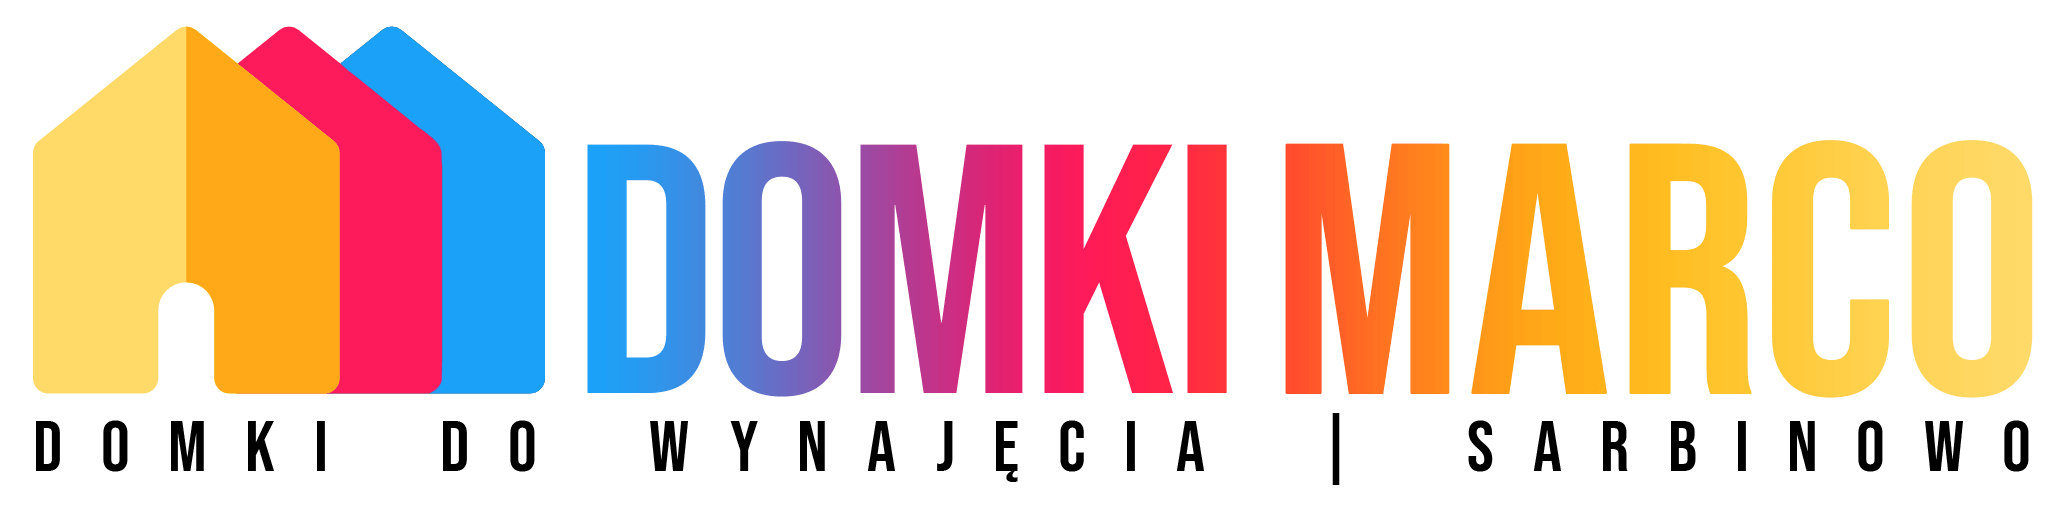 domkimarco_logo_v1 (1)